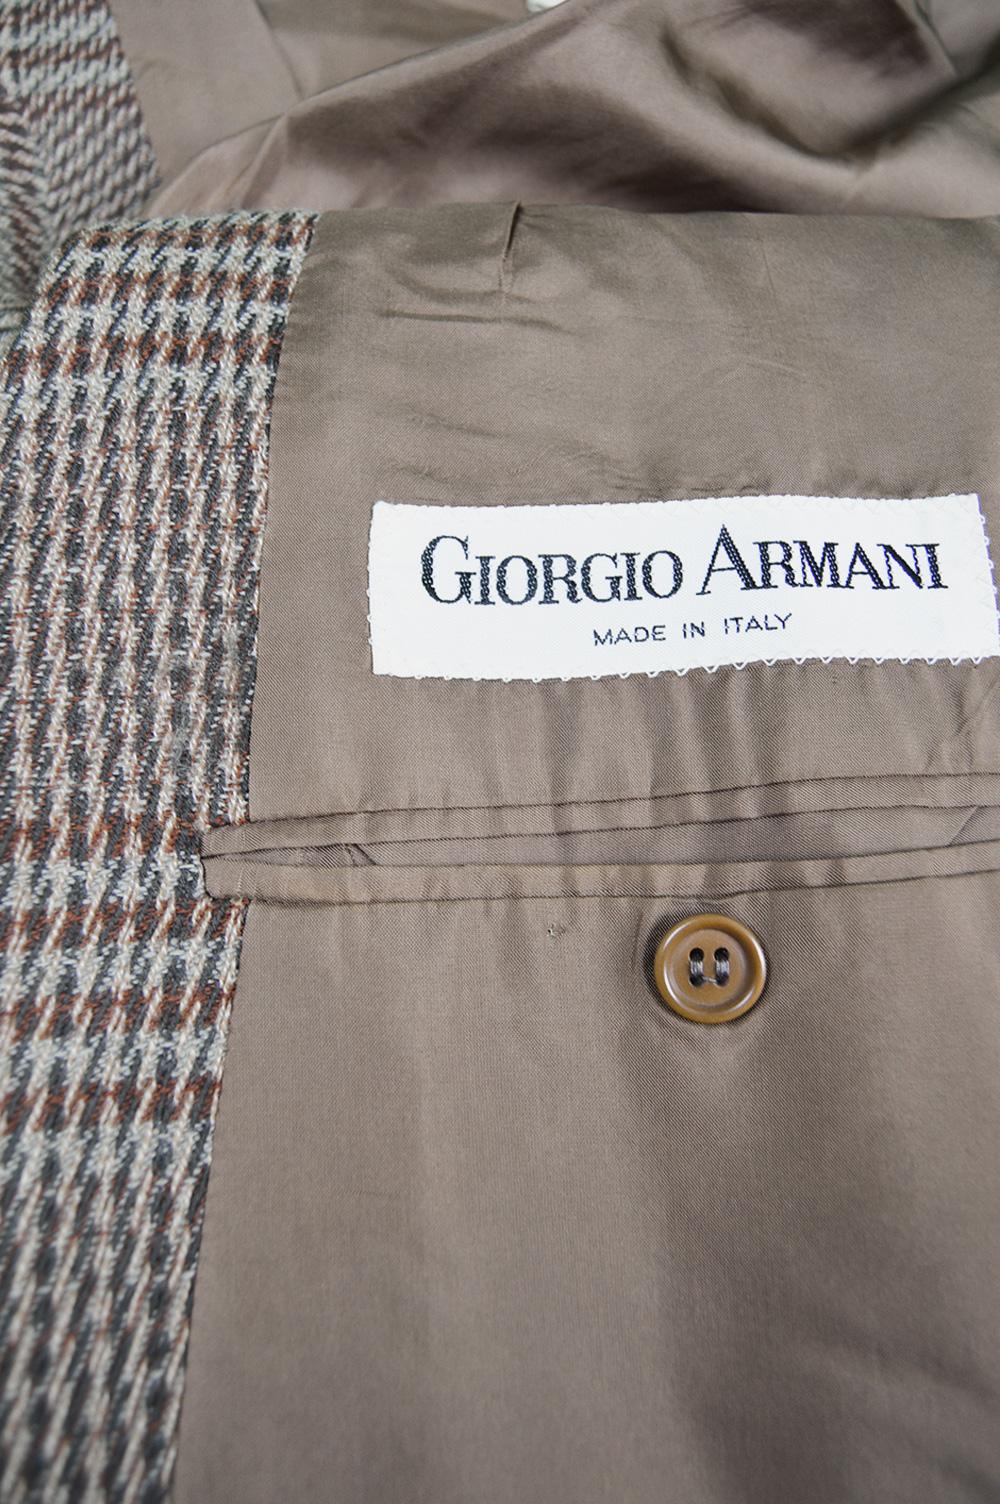 Giorgio Armani Men's Italian Wool Tweed Sportcoat Blazer Jacket, c. 1985 3